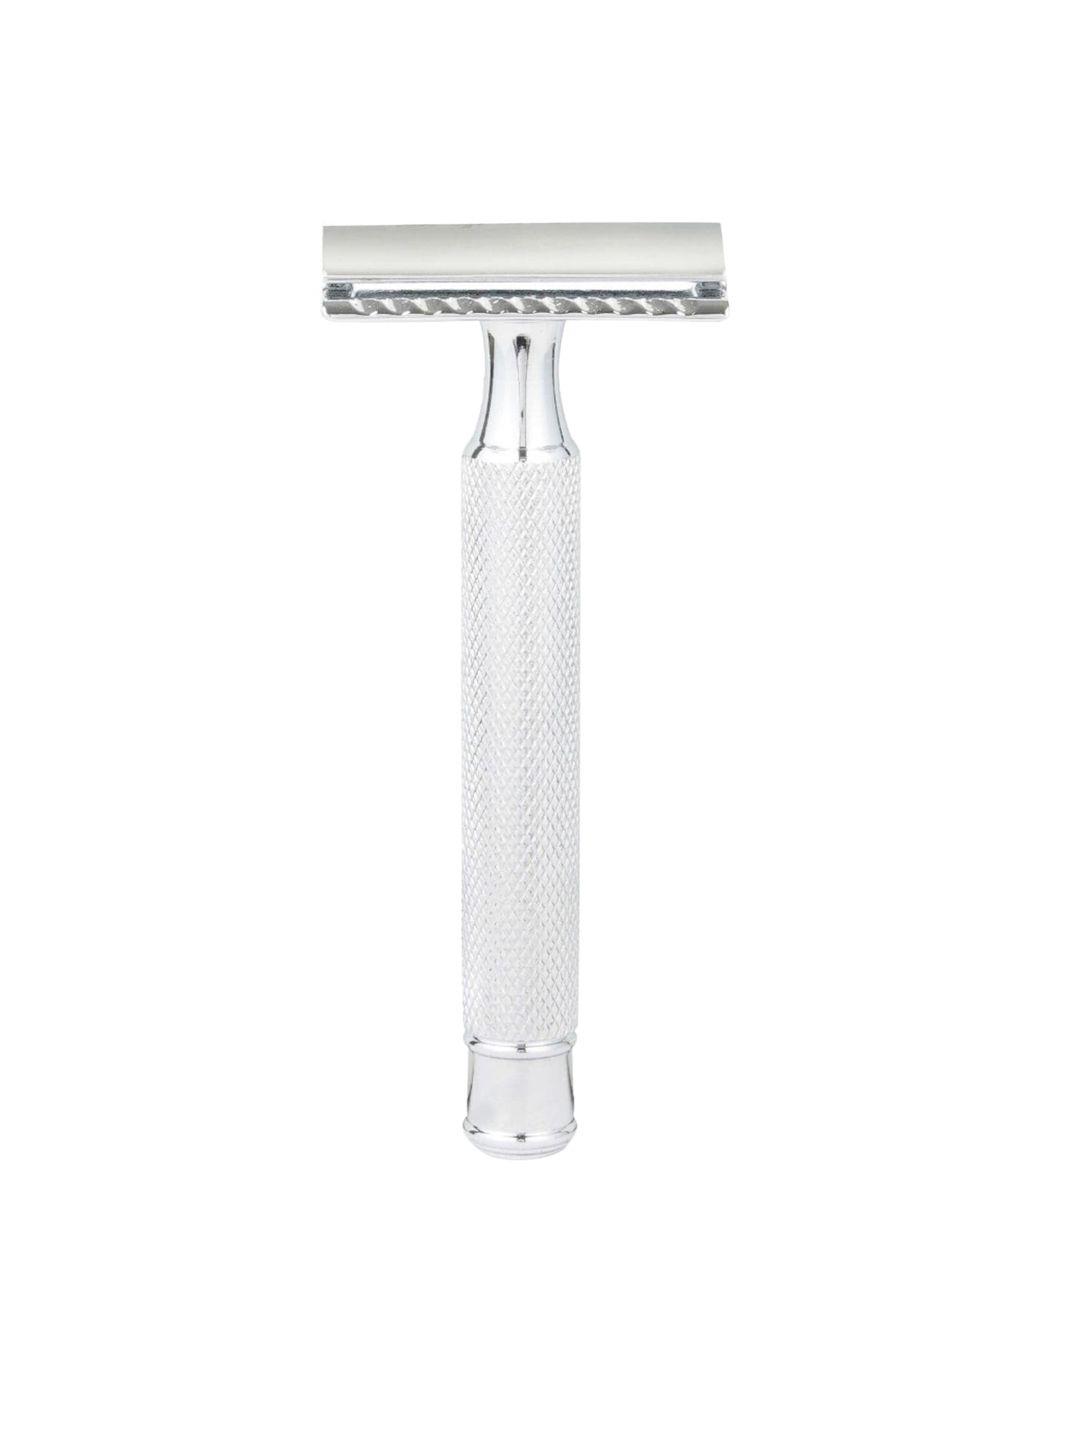 hajamat unisex scythe double edge stainless steel chrome finish closed comb shaving razor